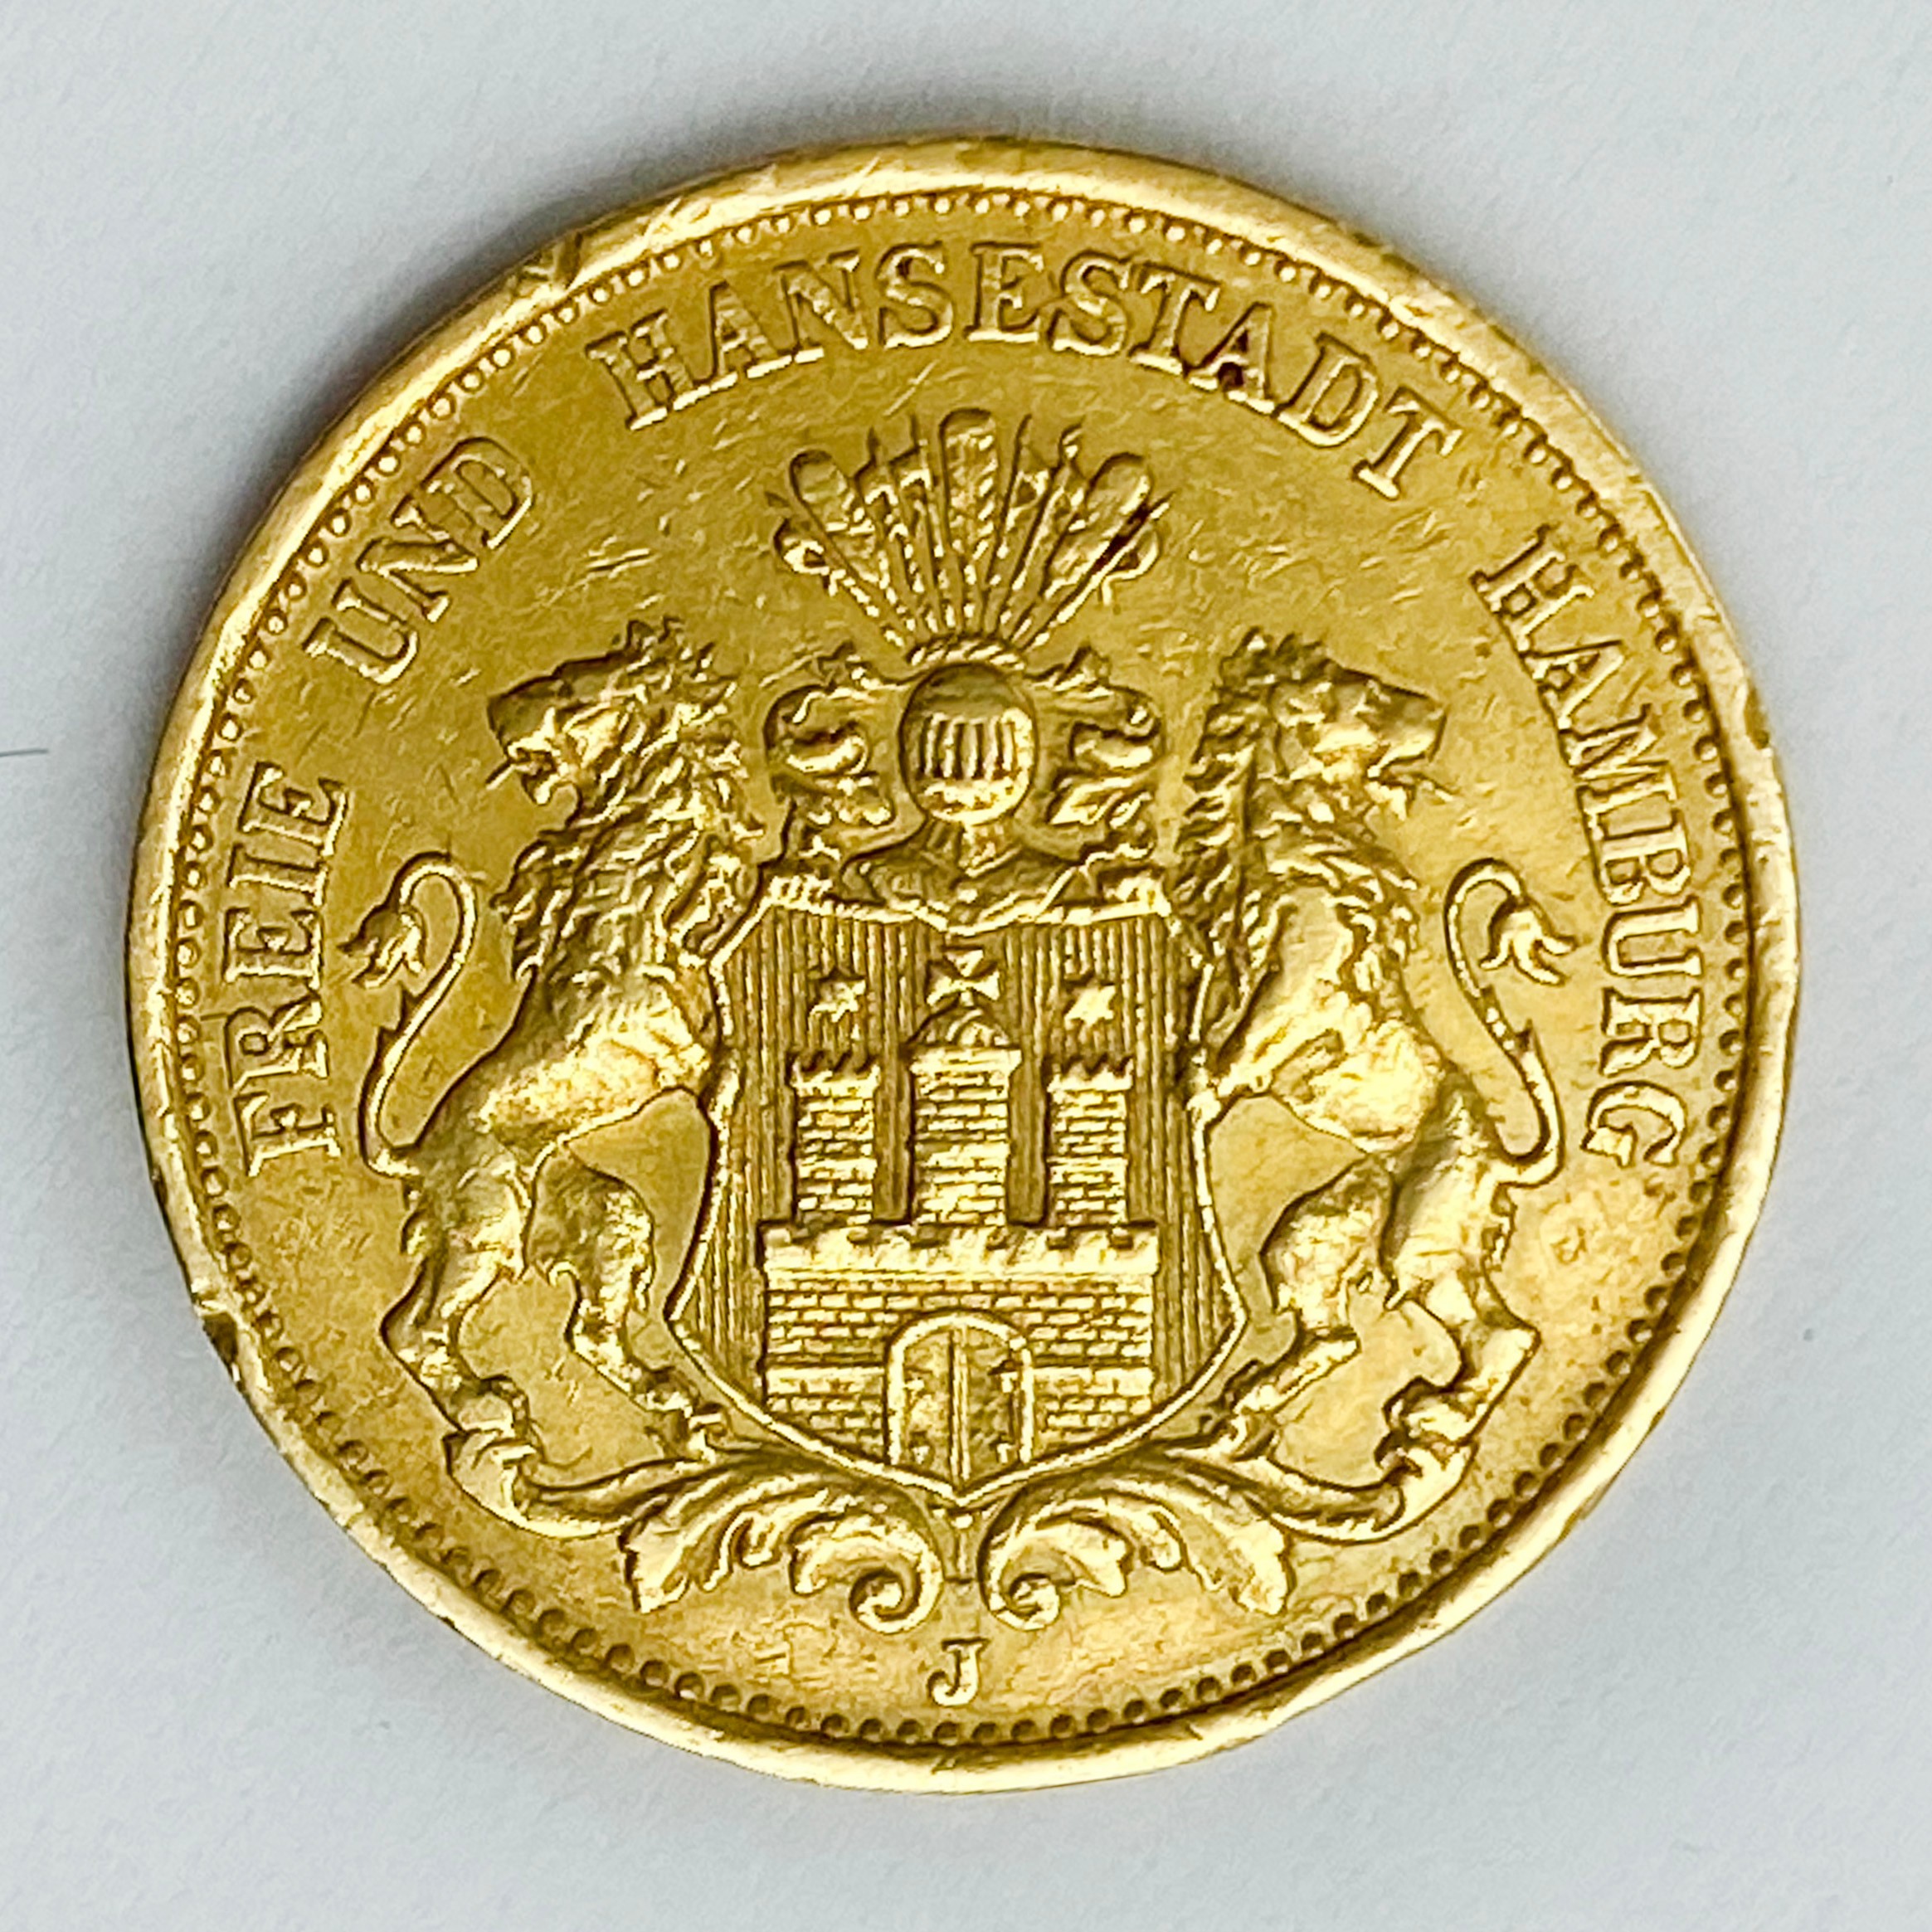 1877 20 MARK FREE HANSEATIC CITY OF HAMBURG (GERMAN STATES) GOLD COIN - Image 2 of 3